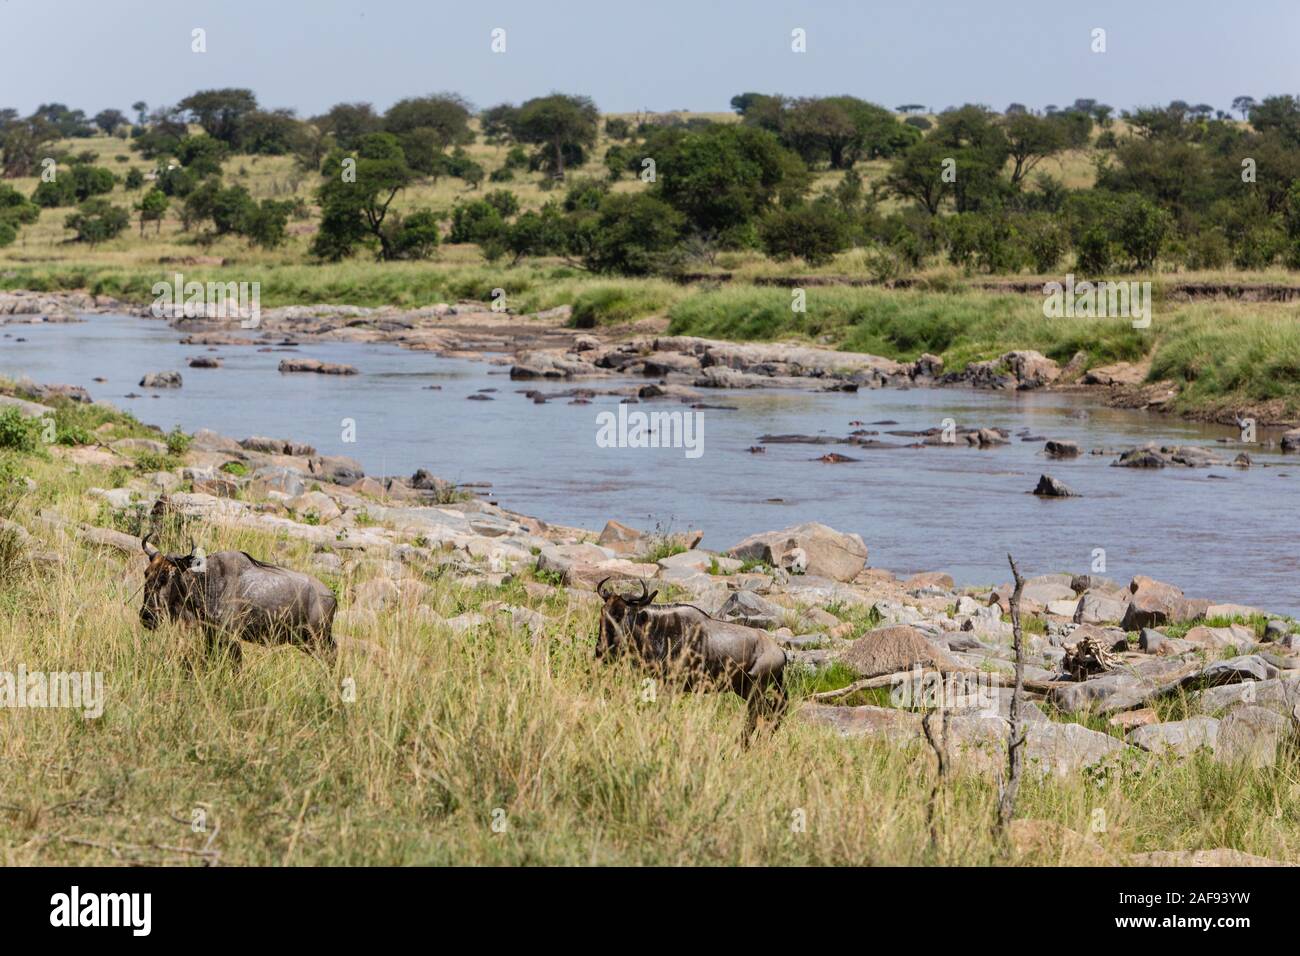 Tanzania. Serengeti. Stock Photo